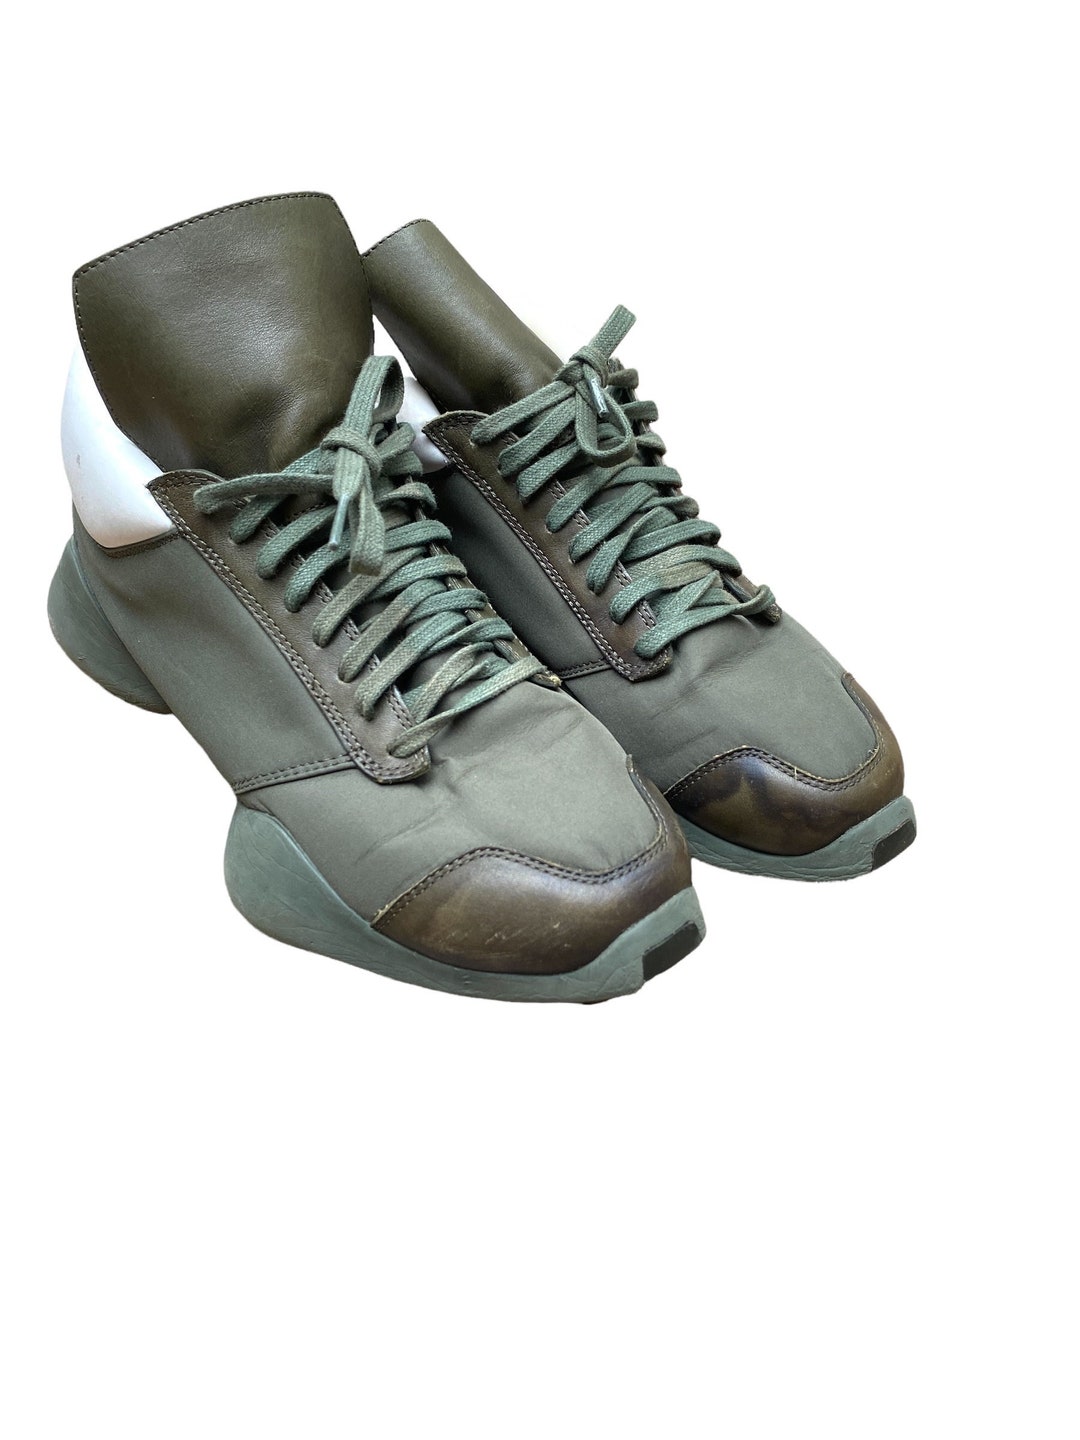 Rick Owens X Adidas Kaki Sneakers - Etsy